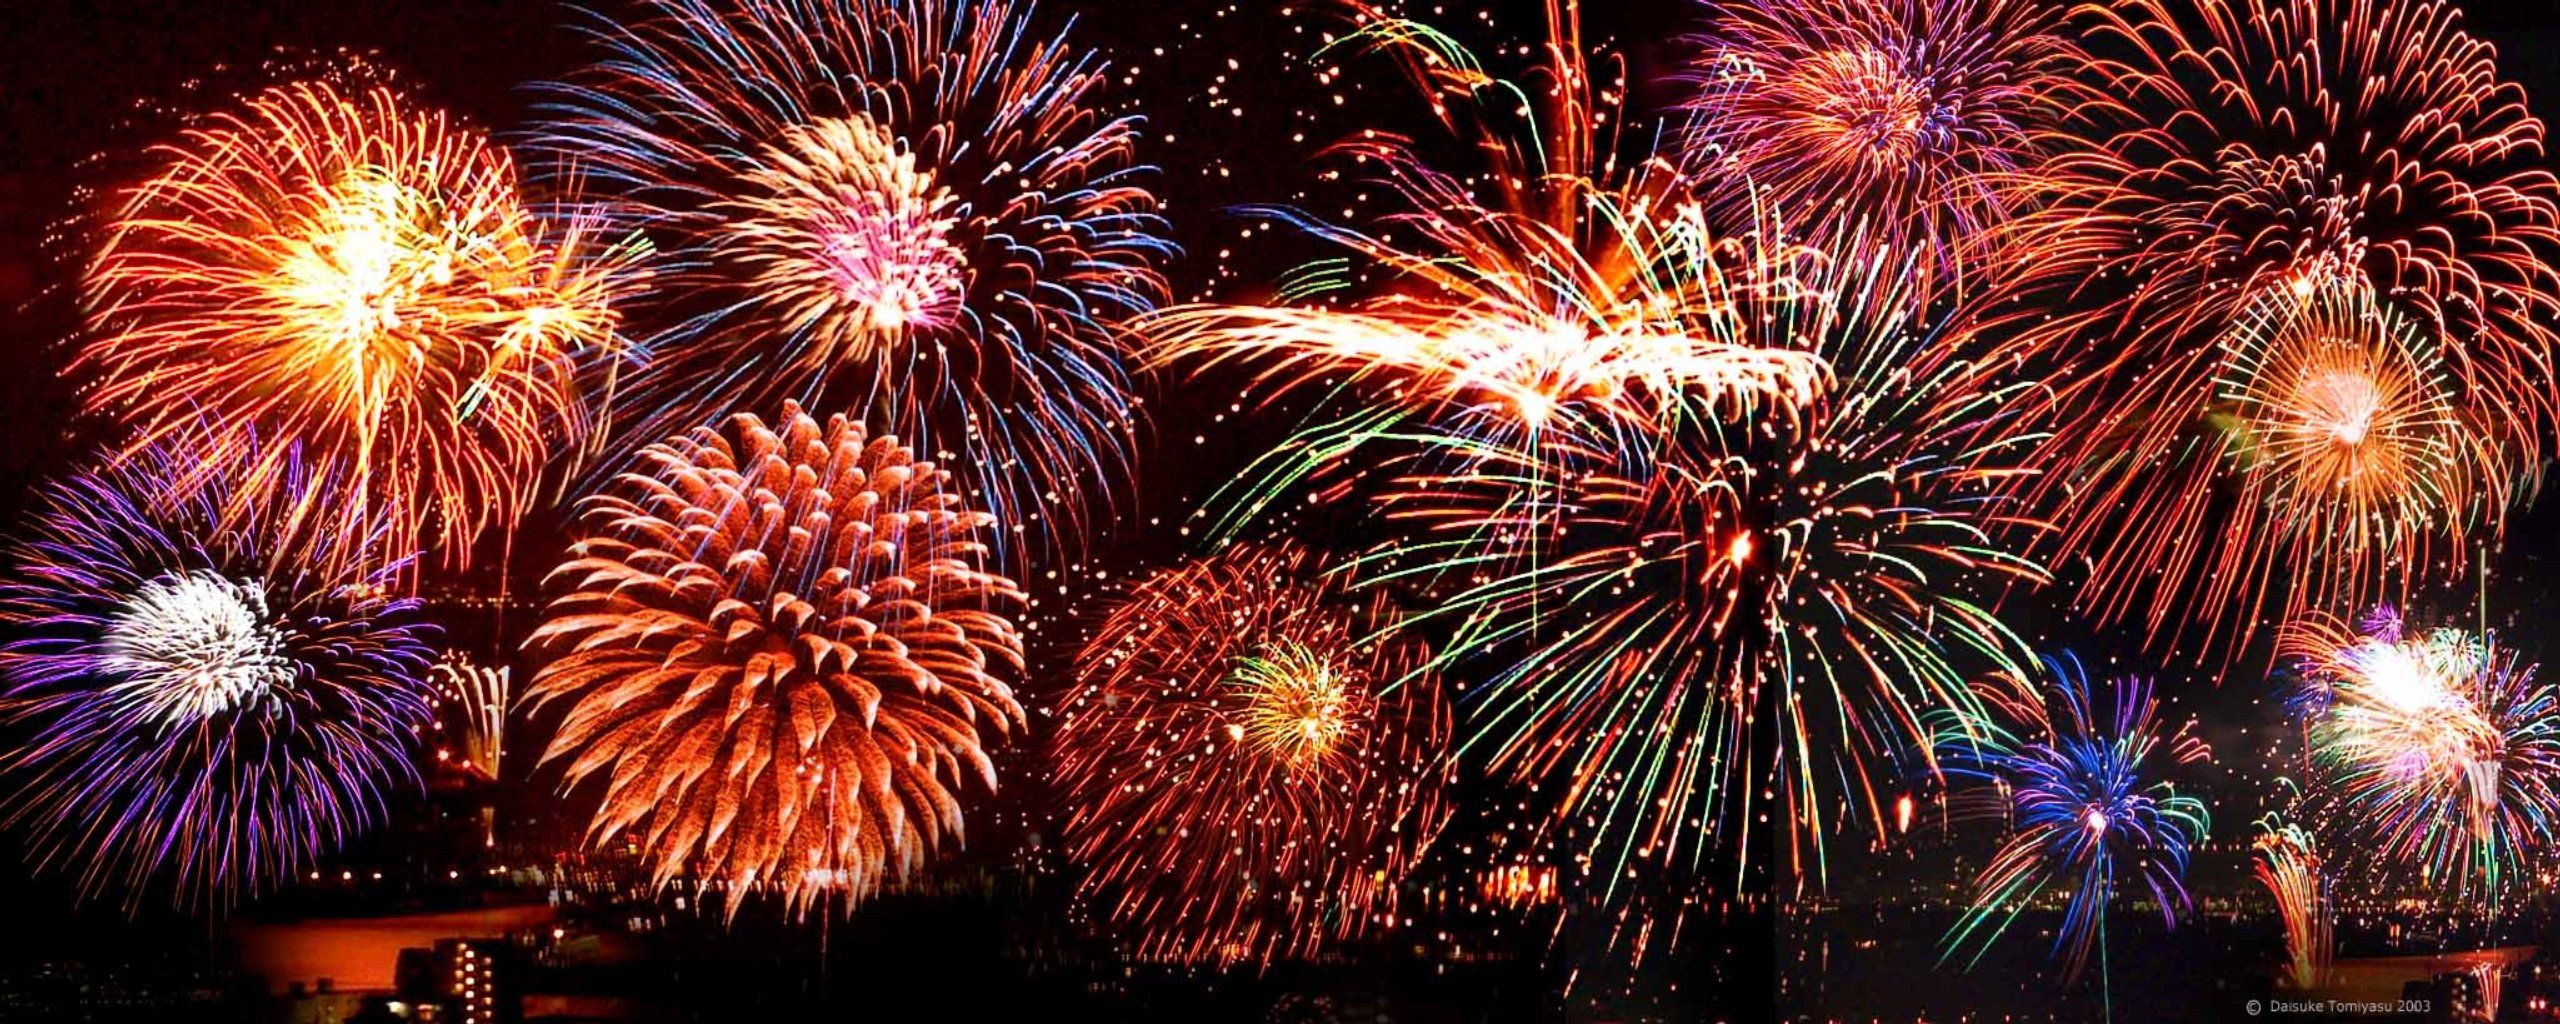 Fireworks New Year Desktop Wallpaper